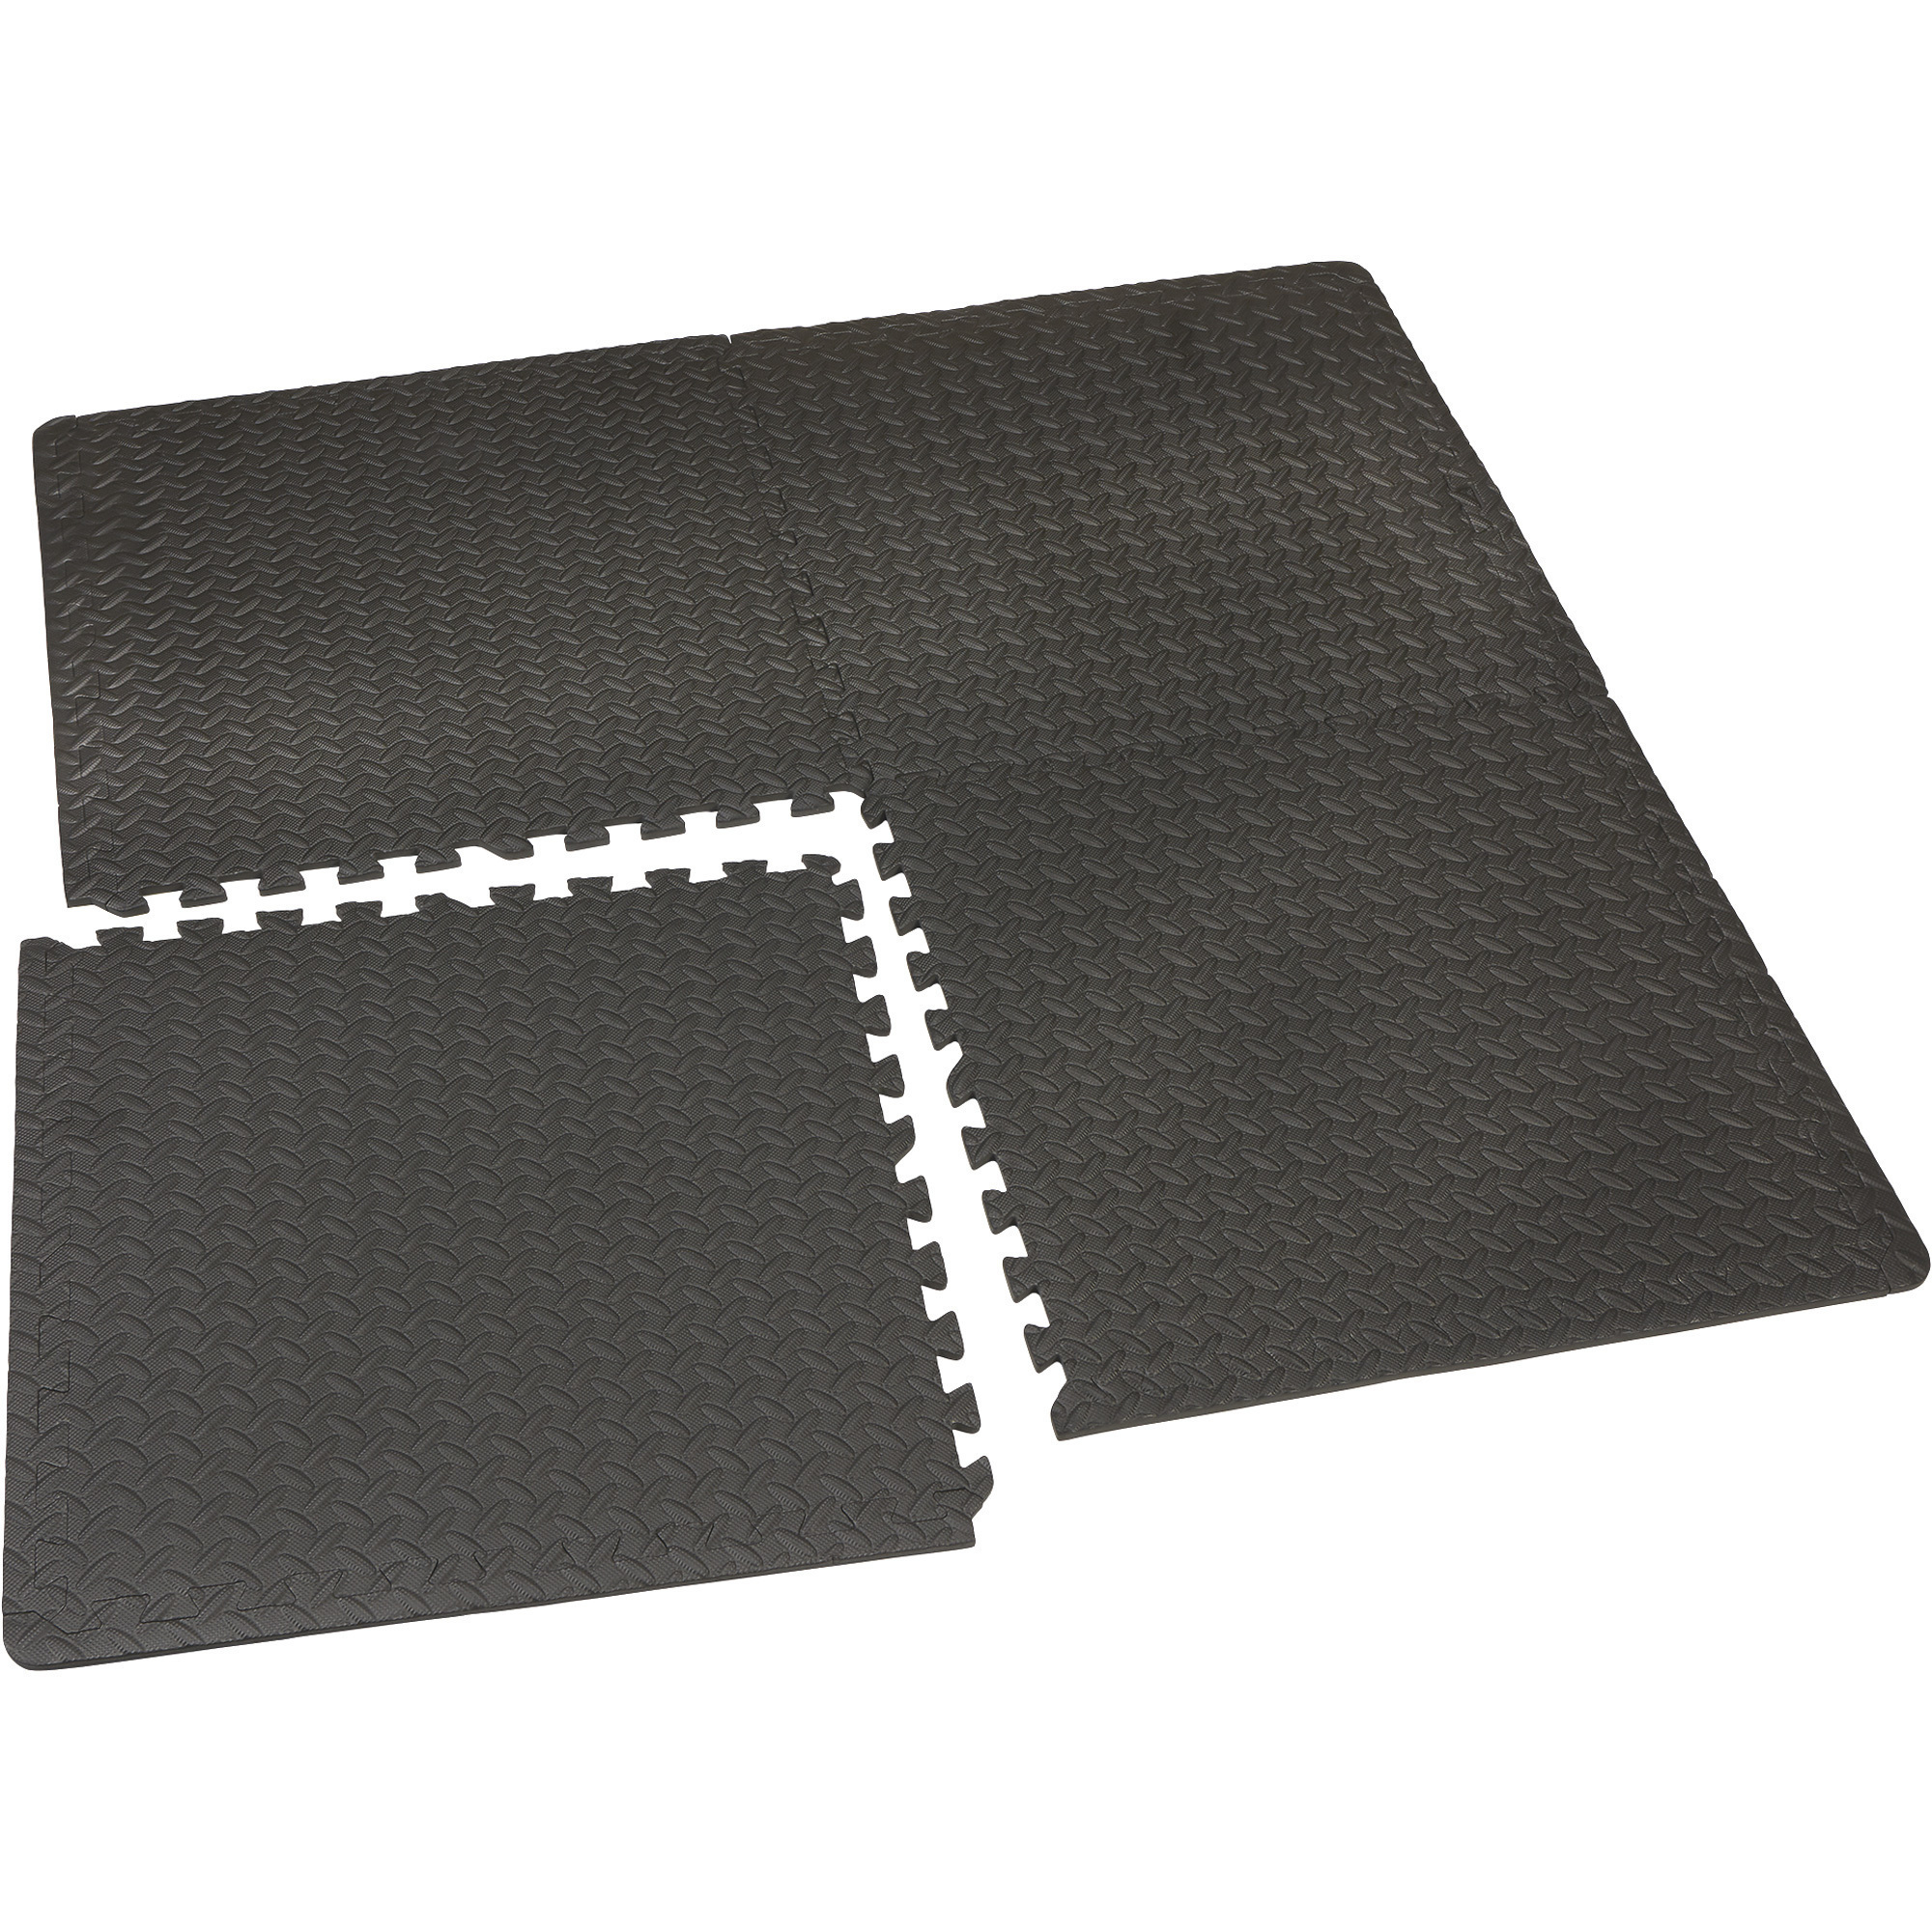 Ironton Anti Fatigue Interlocking Puzzle Floor Mats 4 Pk Northern Tool